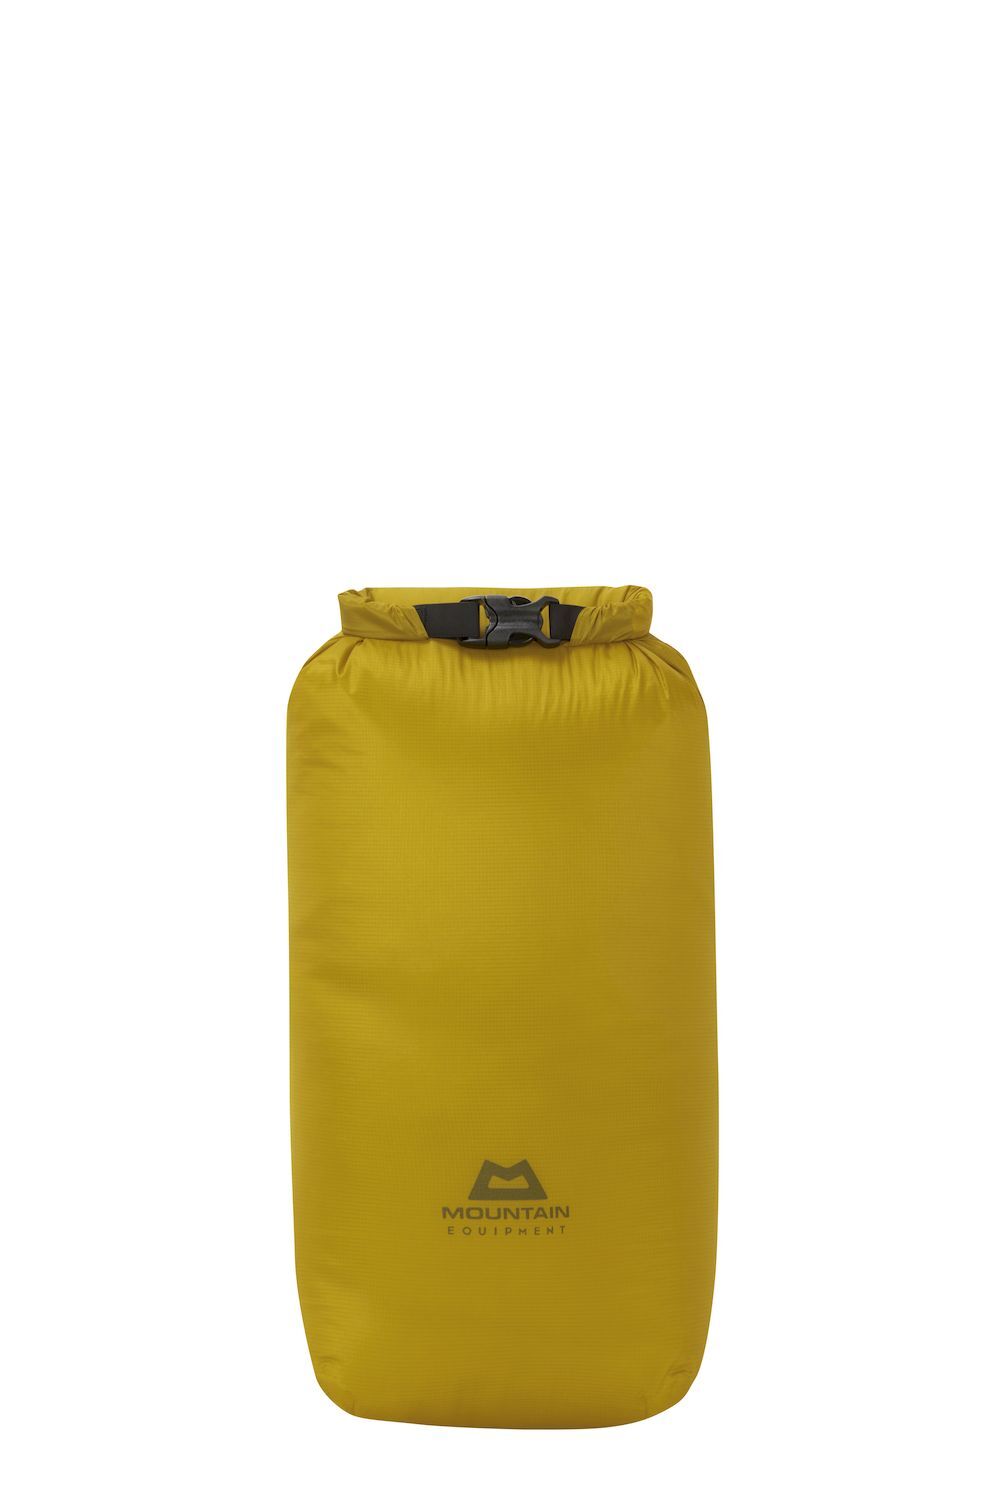 Mountain Equipment Lightweight Drybag 20L - Bolsa impermeable